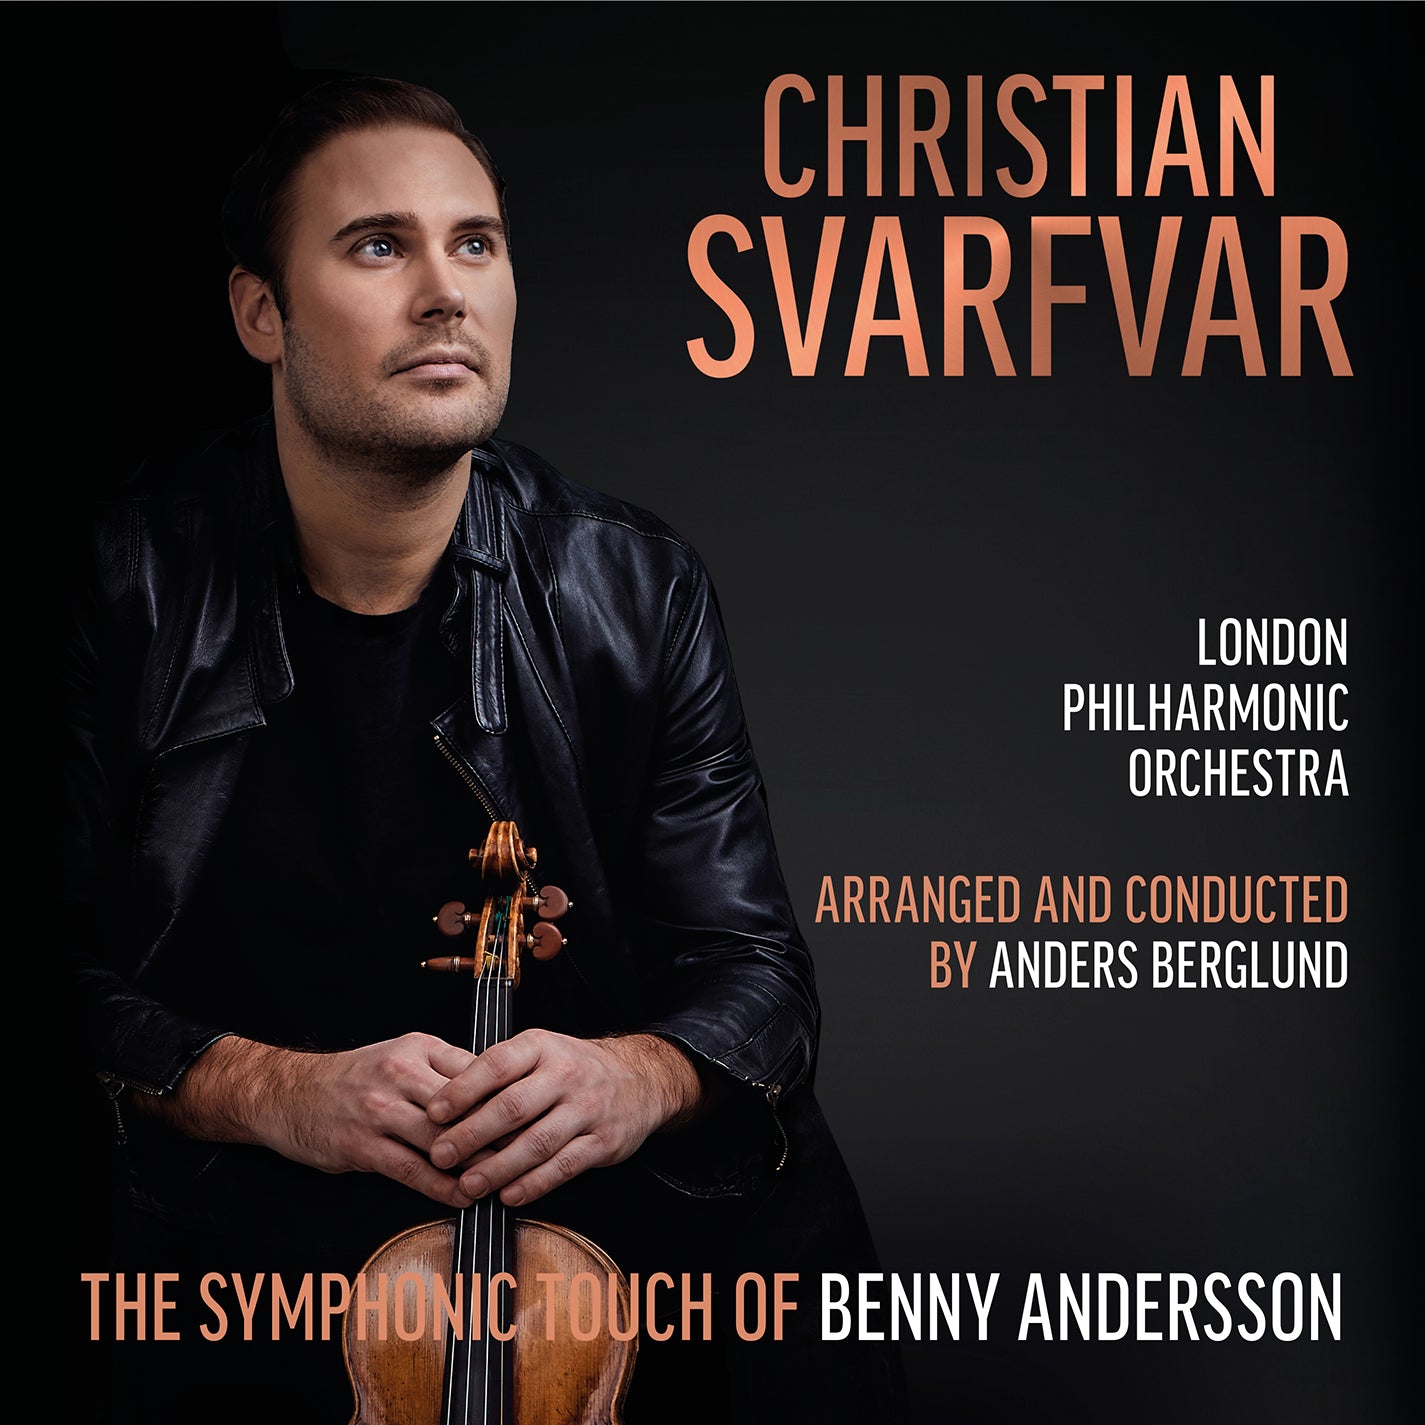 The Symphonic Touch of Benny Andersson / Svarfvar, Berlund, LPO